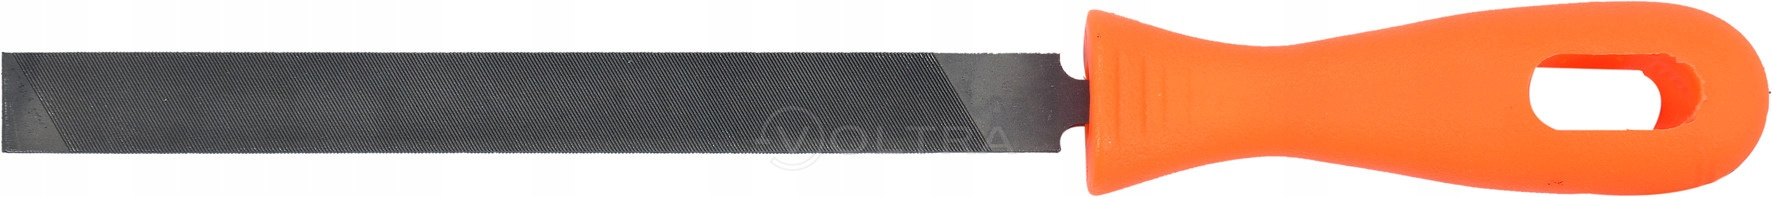 Напильник плоский для шлифования ограничителей глубины 15х2х250мм Yato YT-85022